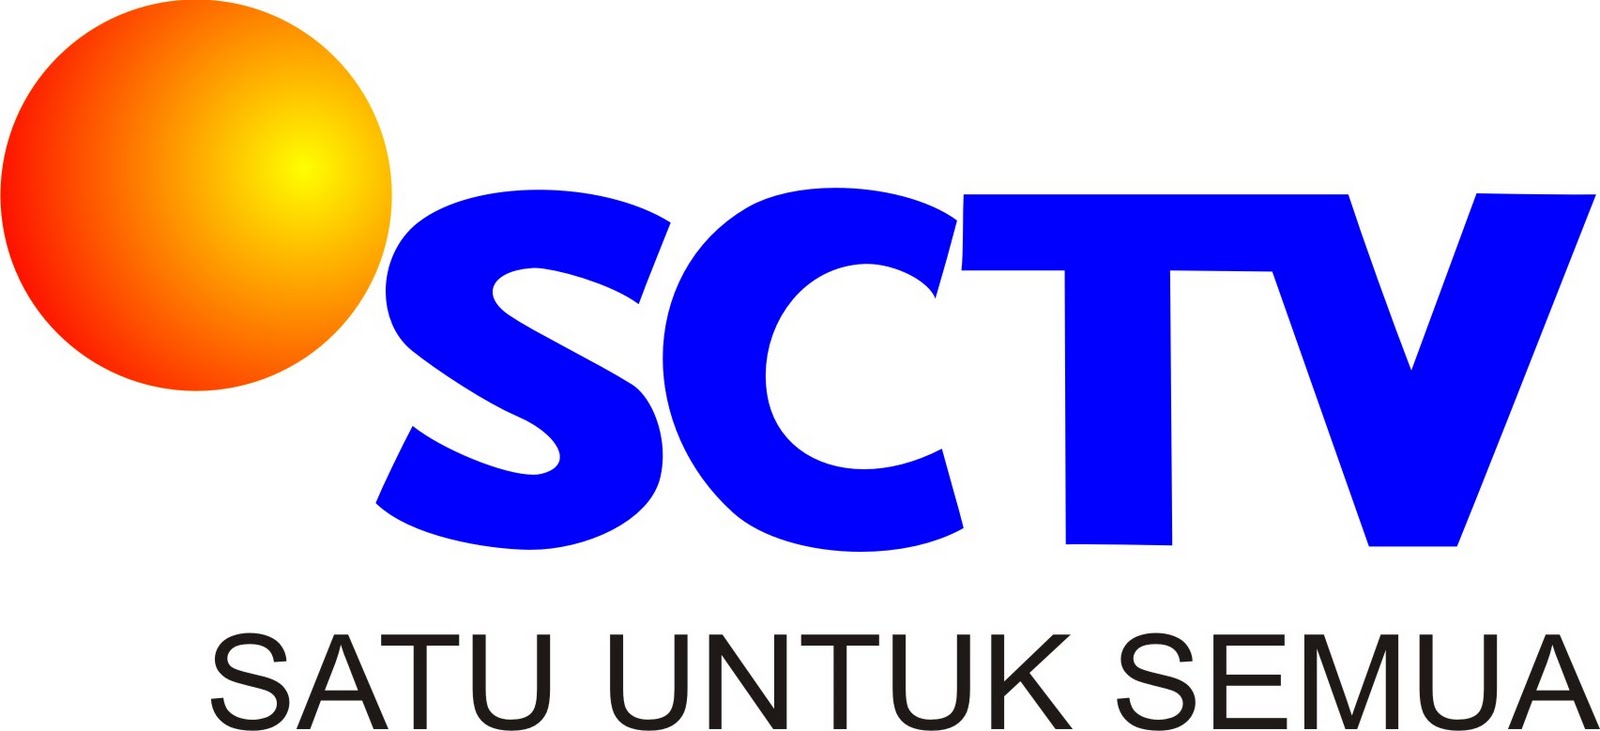  SCTV TV STREAMING INDONESIA Nonton Film Jadul Dan Ftv Online